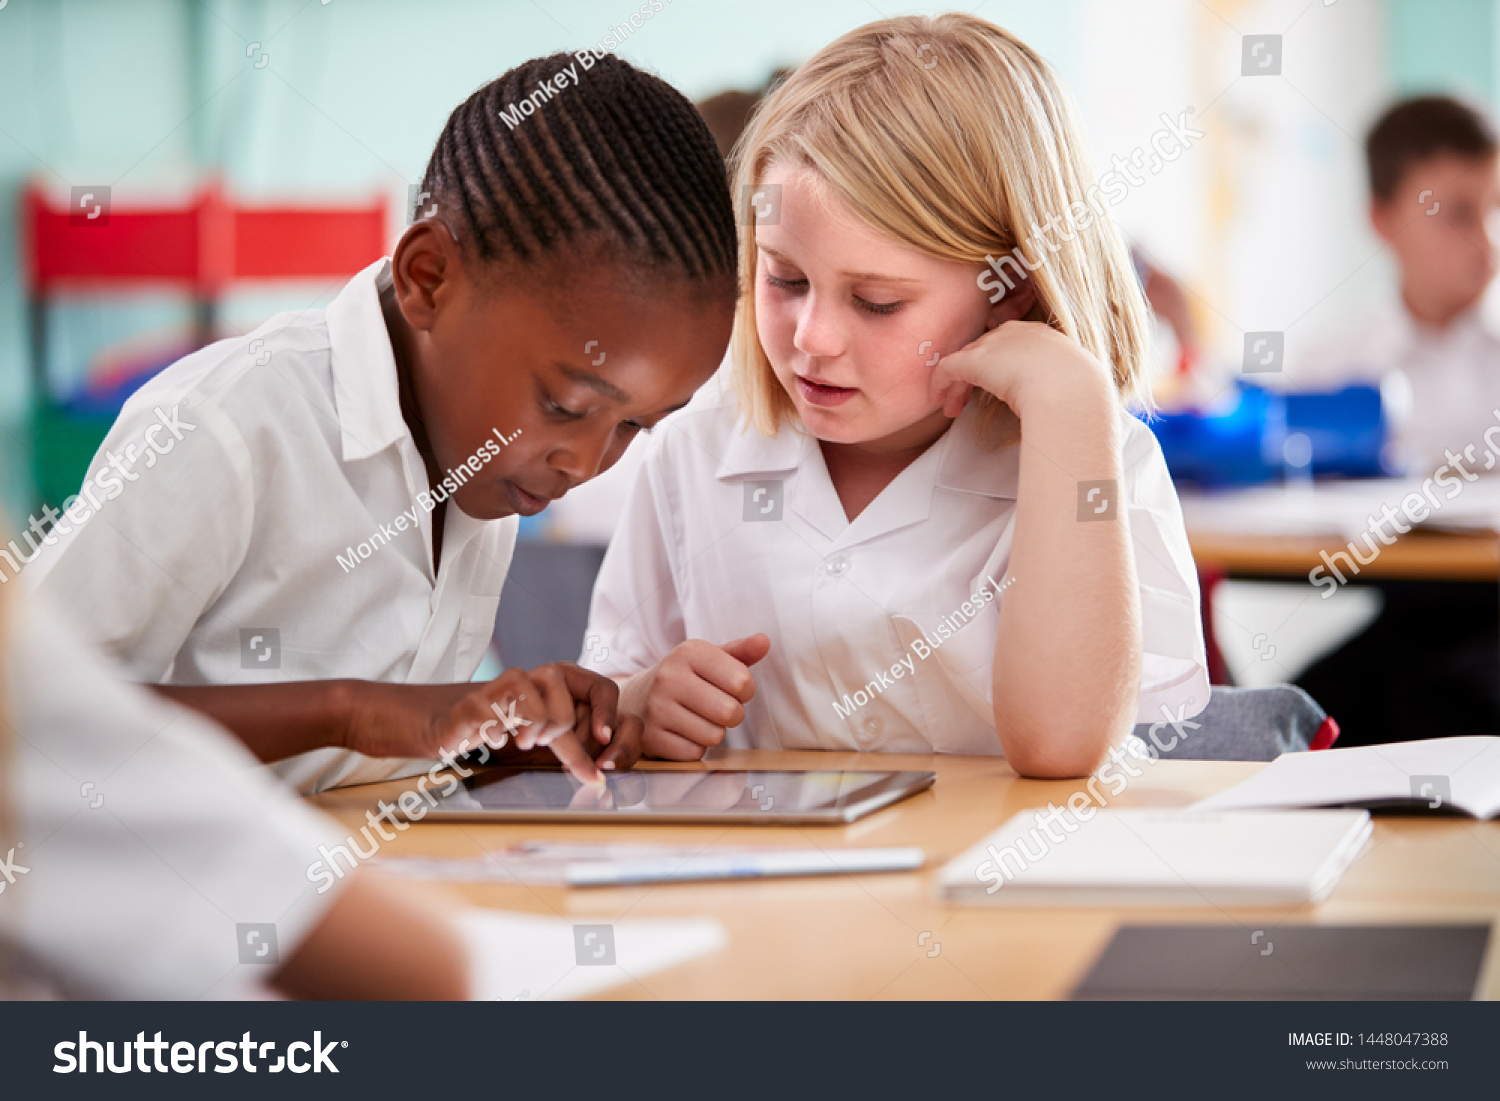 Two Elementary School Pupils Wearing Uniform Using Digital Tablet At Desk #1448047388